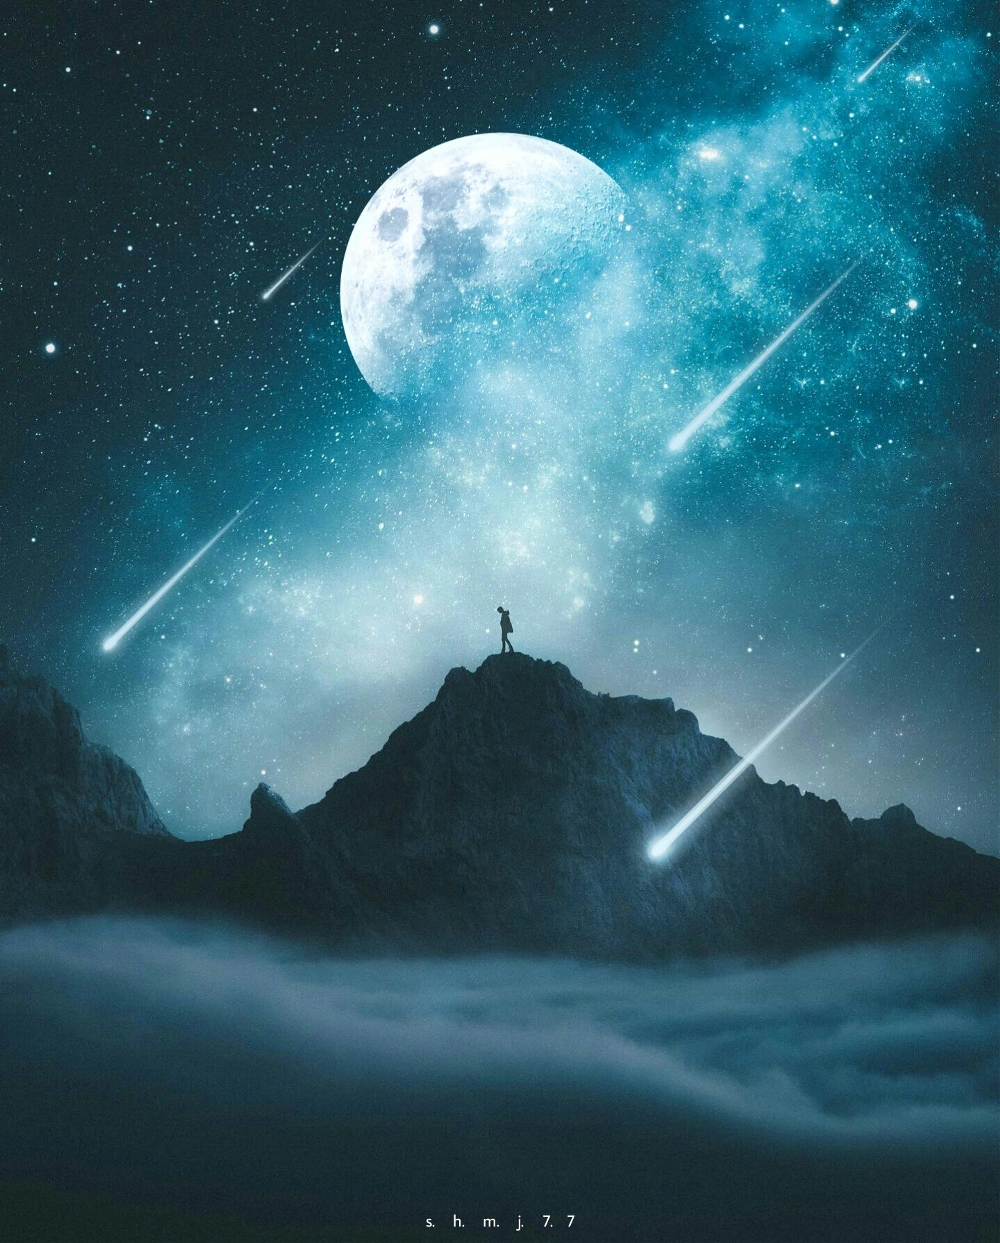 #man#nightsky#sky#blue#moon#stars
#shootingstar#background#wallpaper
#be_creative#masterstoryteller